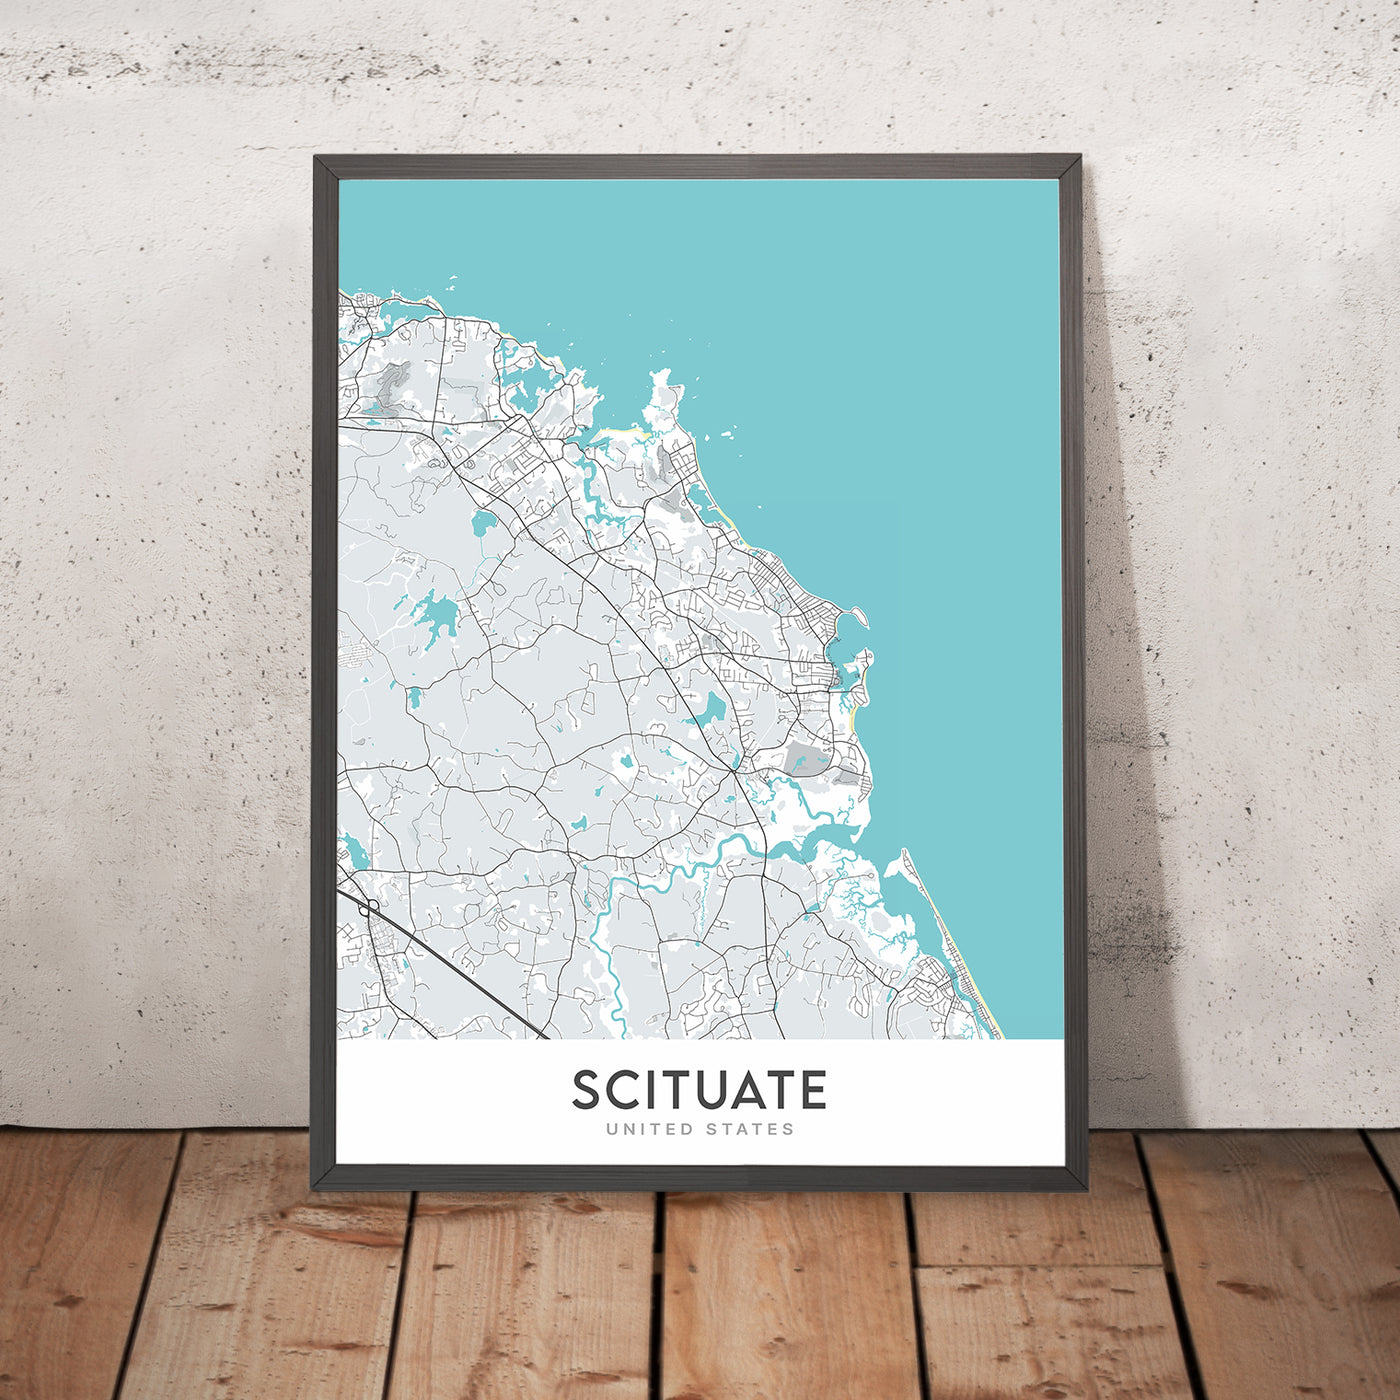 Mapa moderno de la ciudad de Scituate, MA: puerto de Scituate, tercer acantilado, playa de Egipto, torre Lawson, primera iglesia parroquial